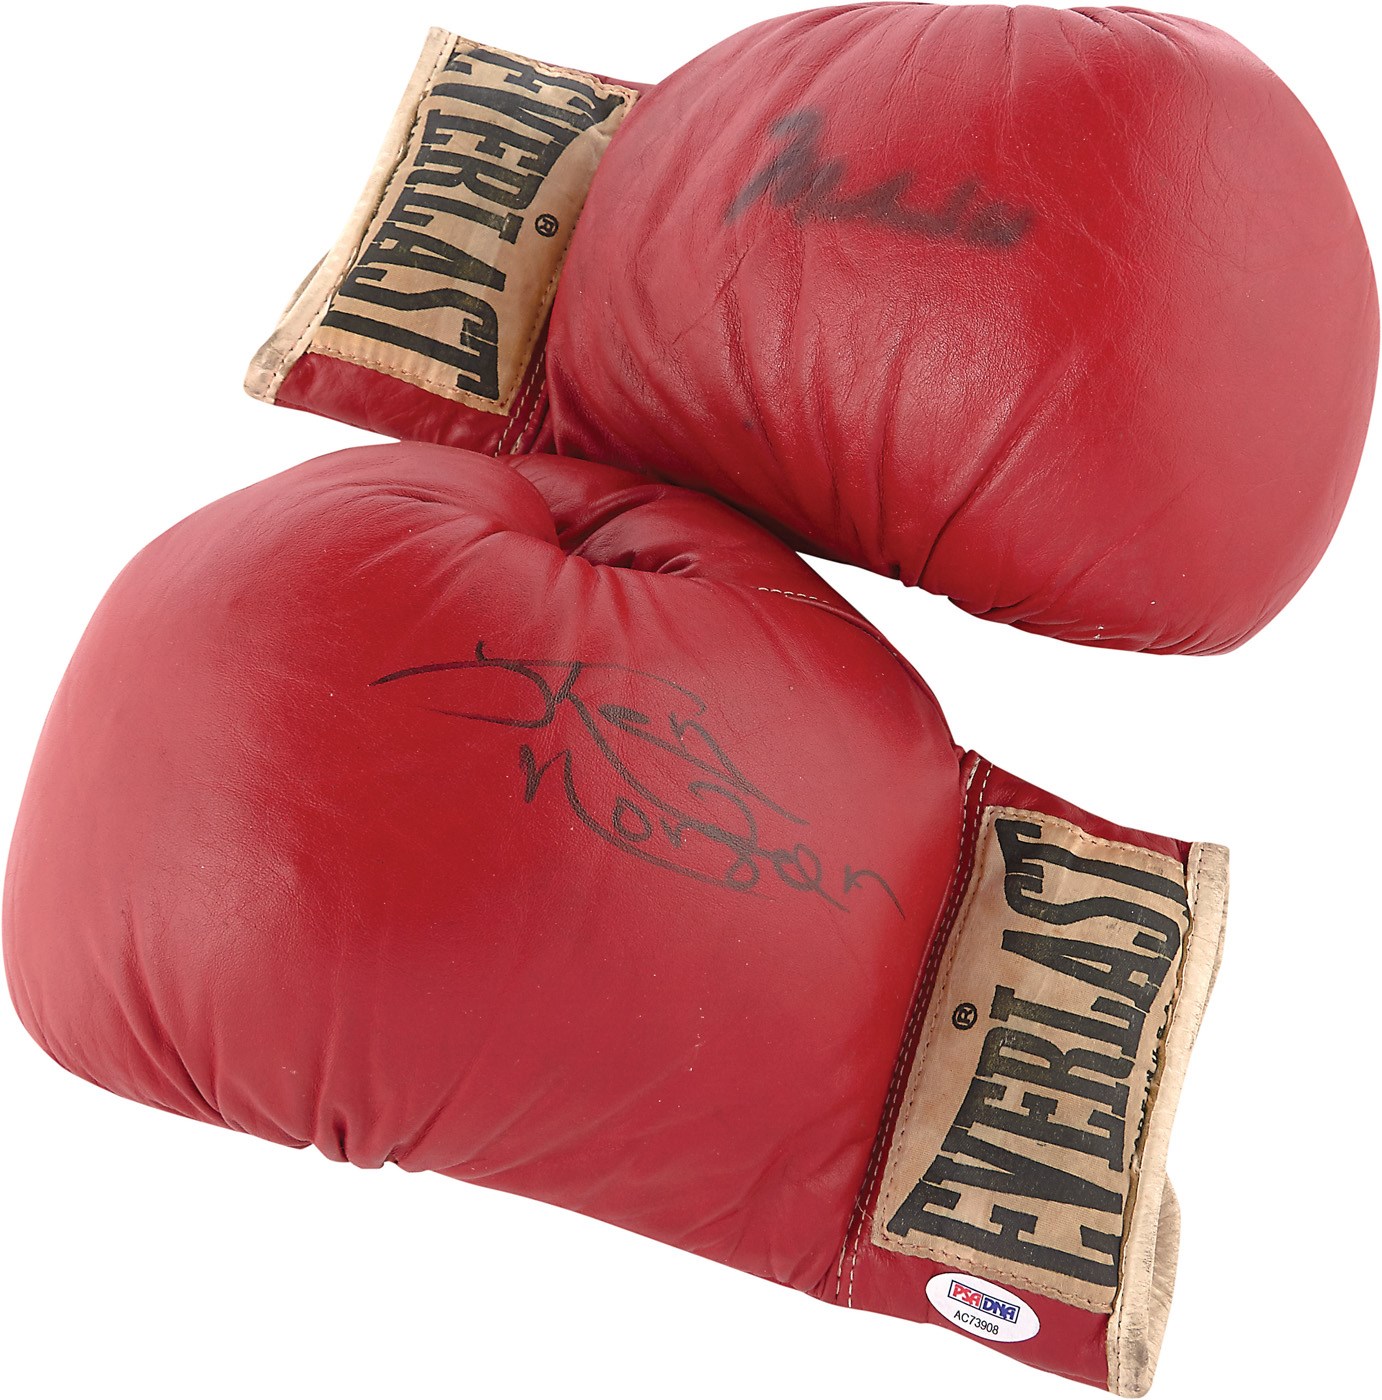 Muhammad Ali & Boxing - Ken Norton 1976 Fight Worn Gloves from Norton vs. Ali III at Yankee Stadium - Signed by Norton & Ali (Resolution Photomatching LOA)